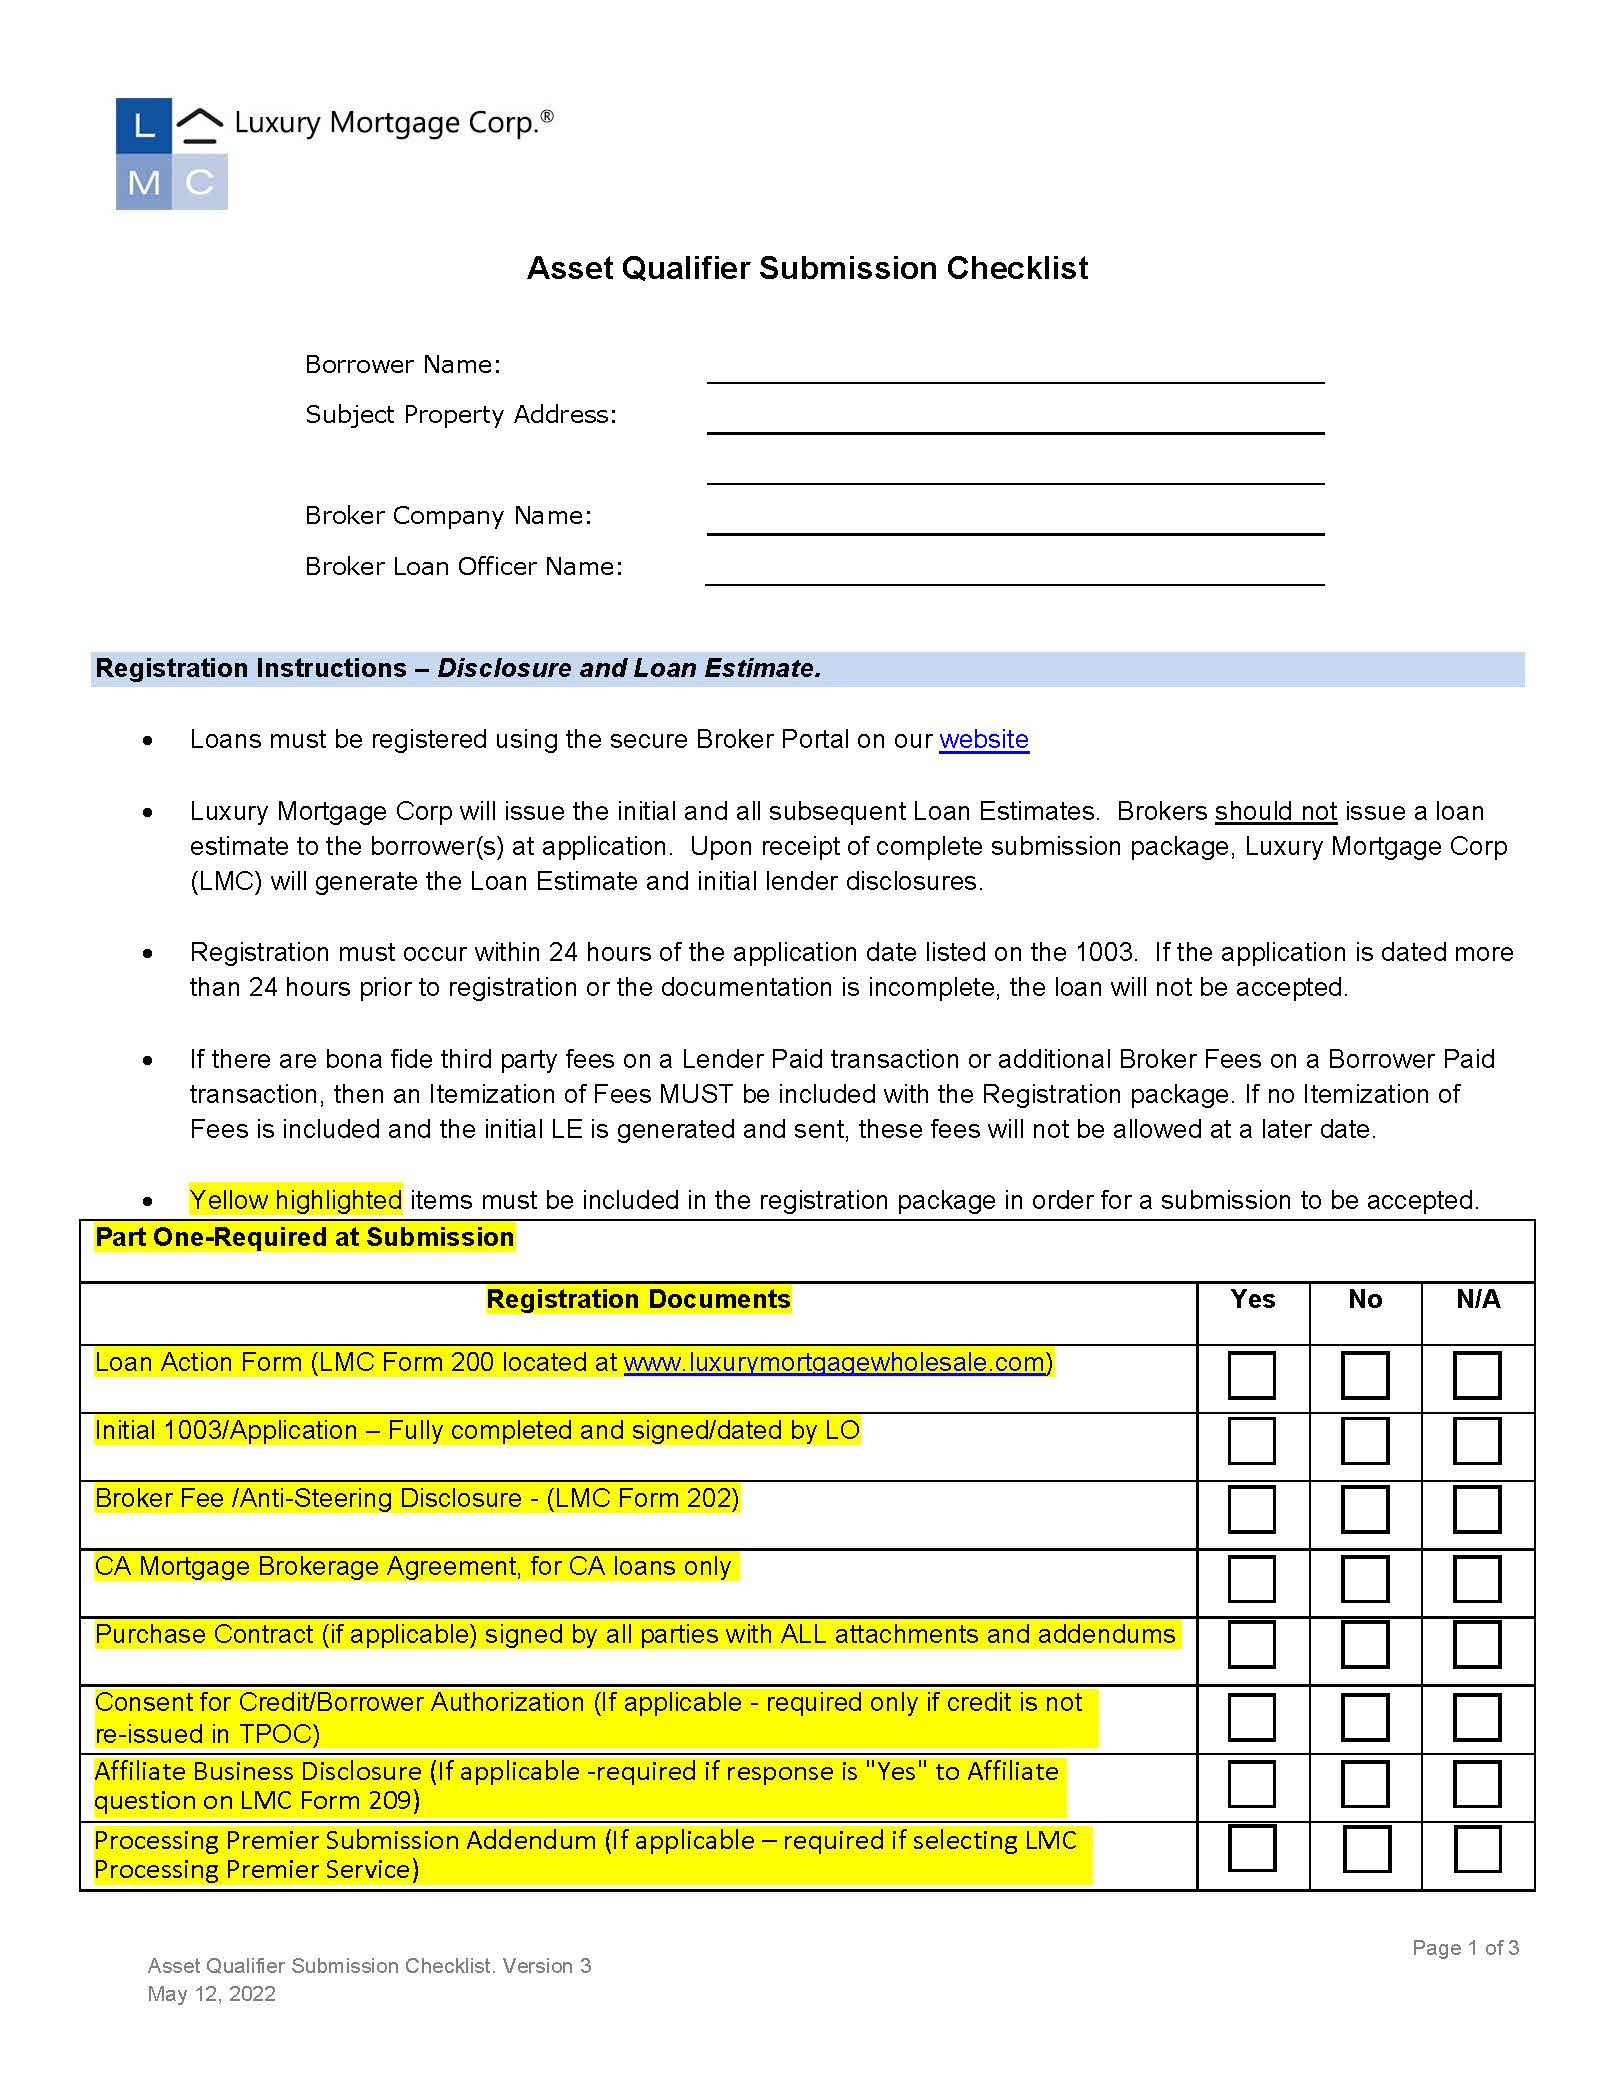 Asset Qualifier Submission Checklist V.3